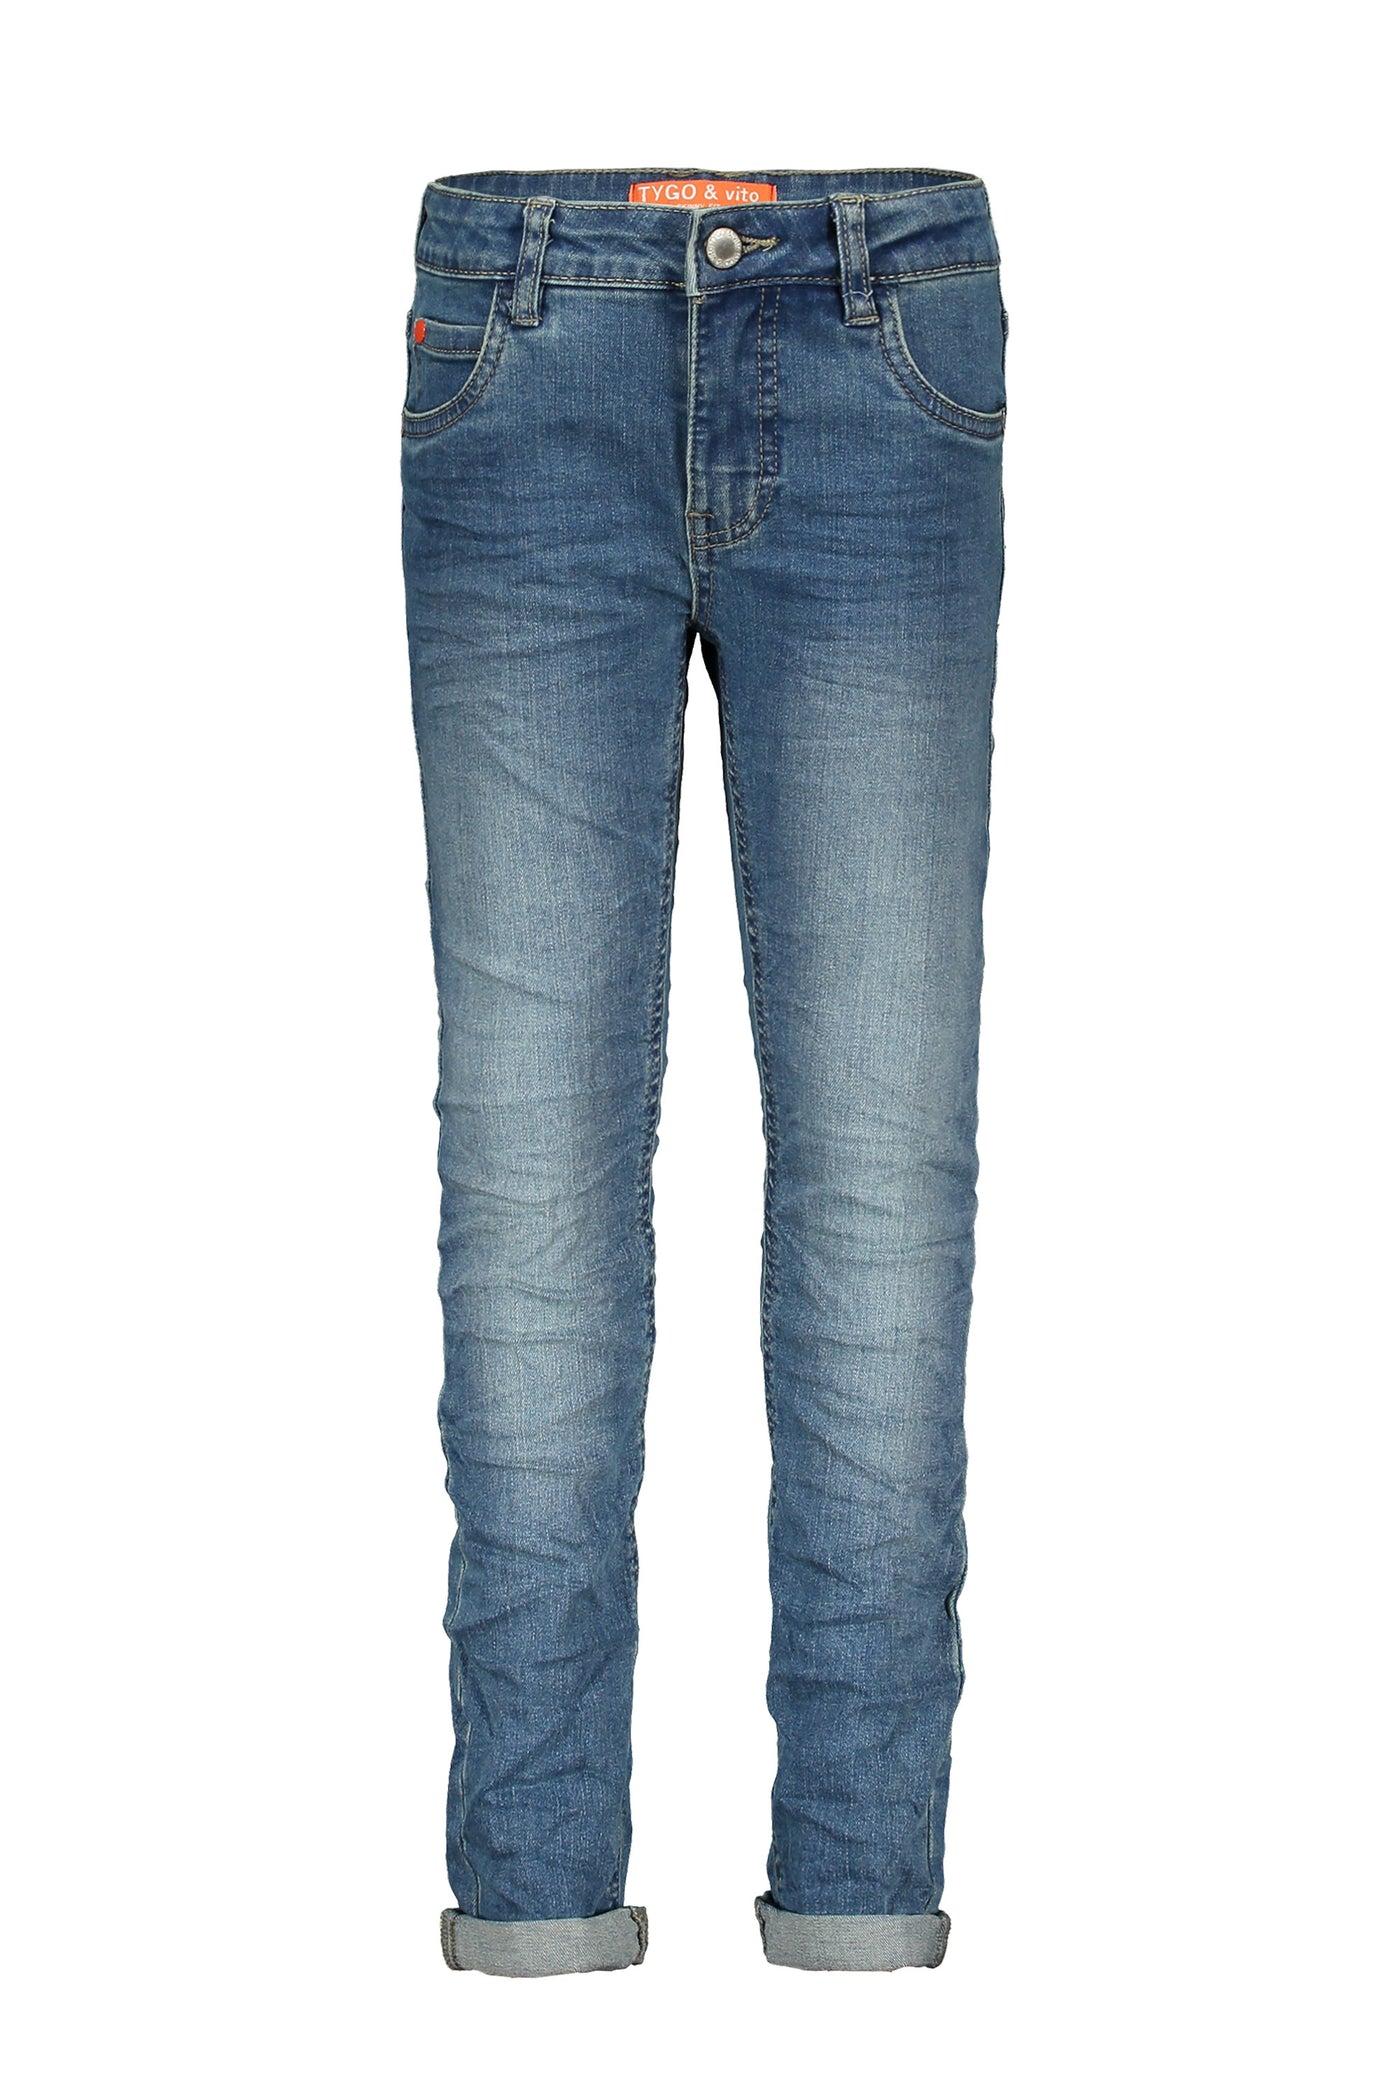 Tygo & Vito skinny jeans stretch jeans Light Used XNOOS002-6600 801